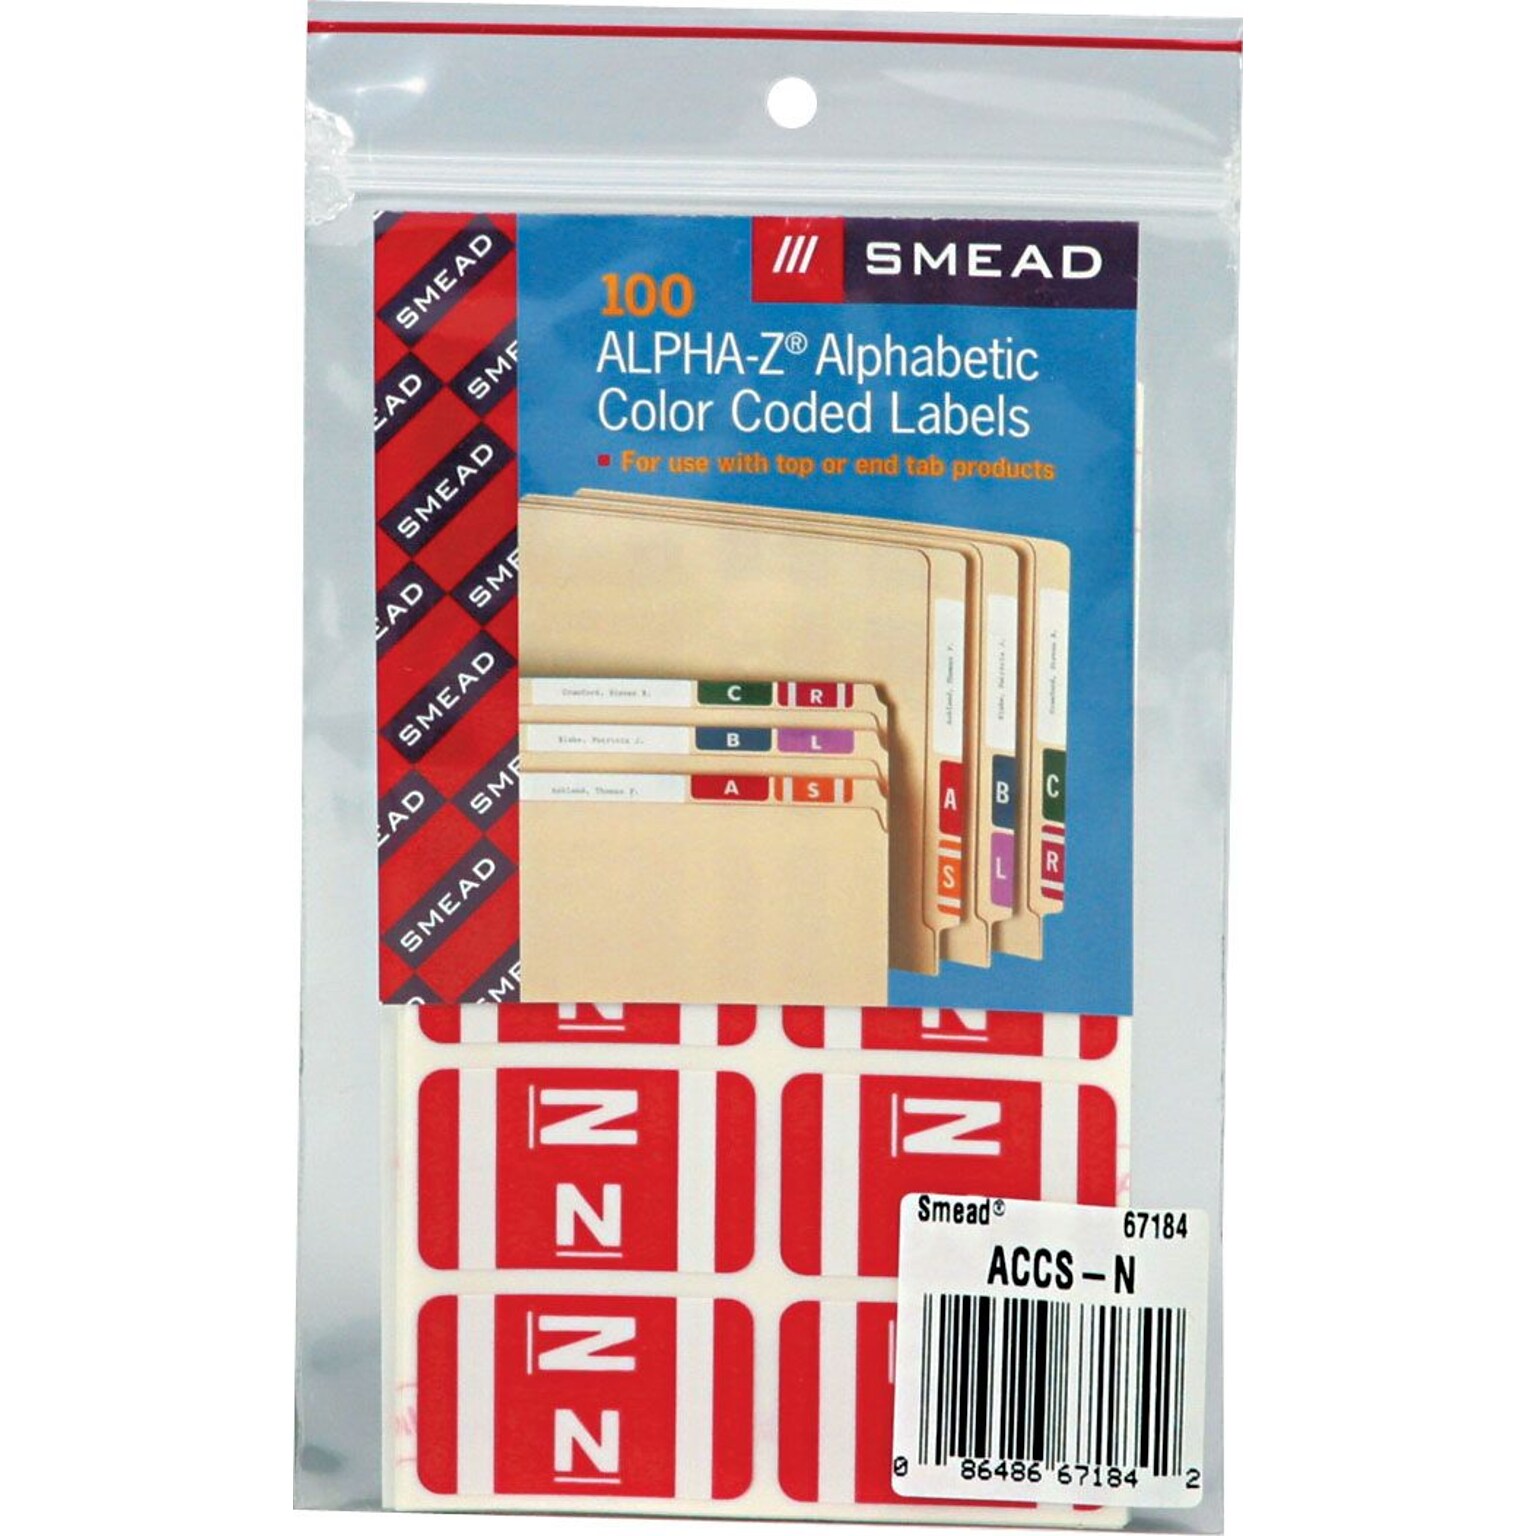 Smead AlphaZ ACCS Color-Coded Alphabetic Labels, N, Green/White, 100/Pk (67184)